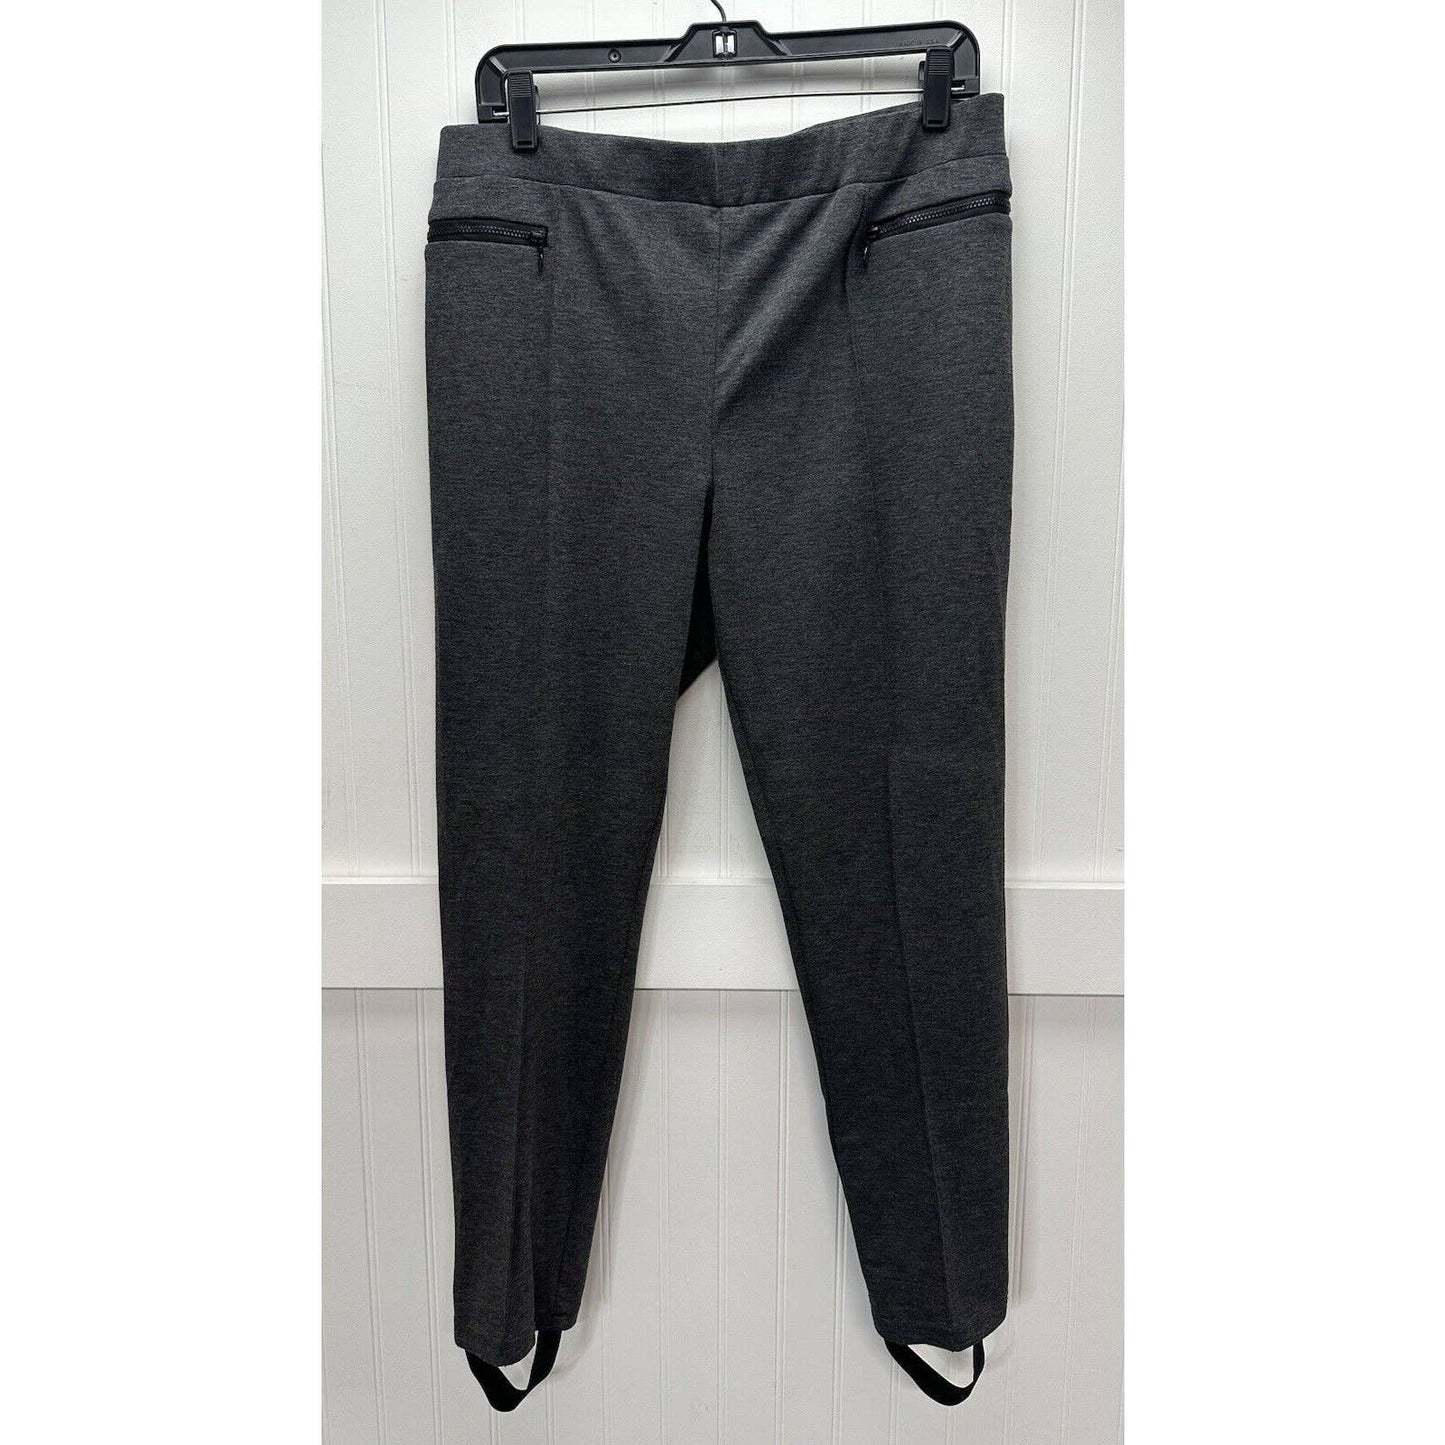 Soft Surroundings Skinny Ankle Pants PL Petite Large Gray Knit Stirrup Option